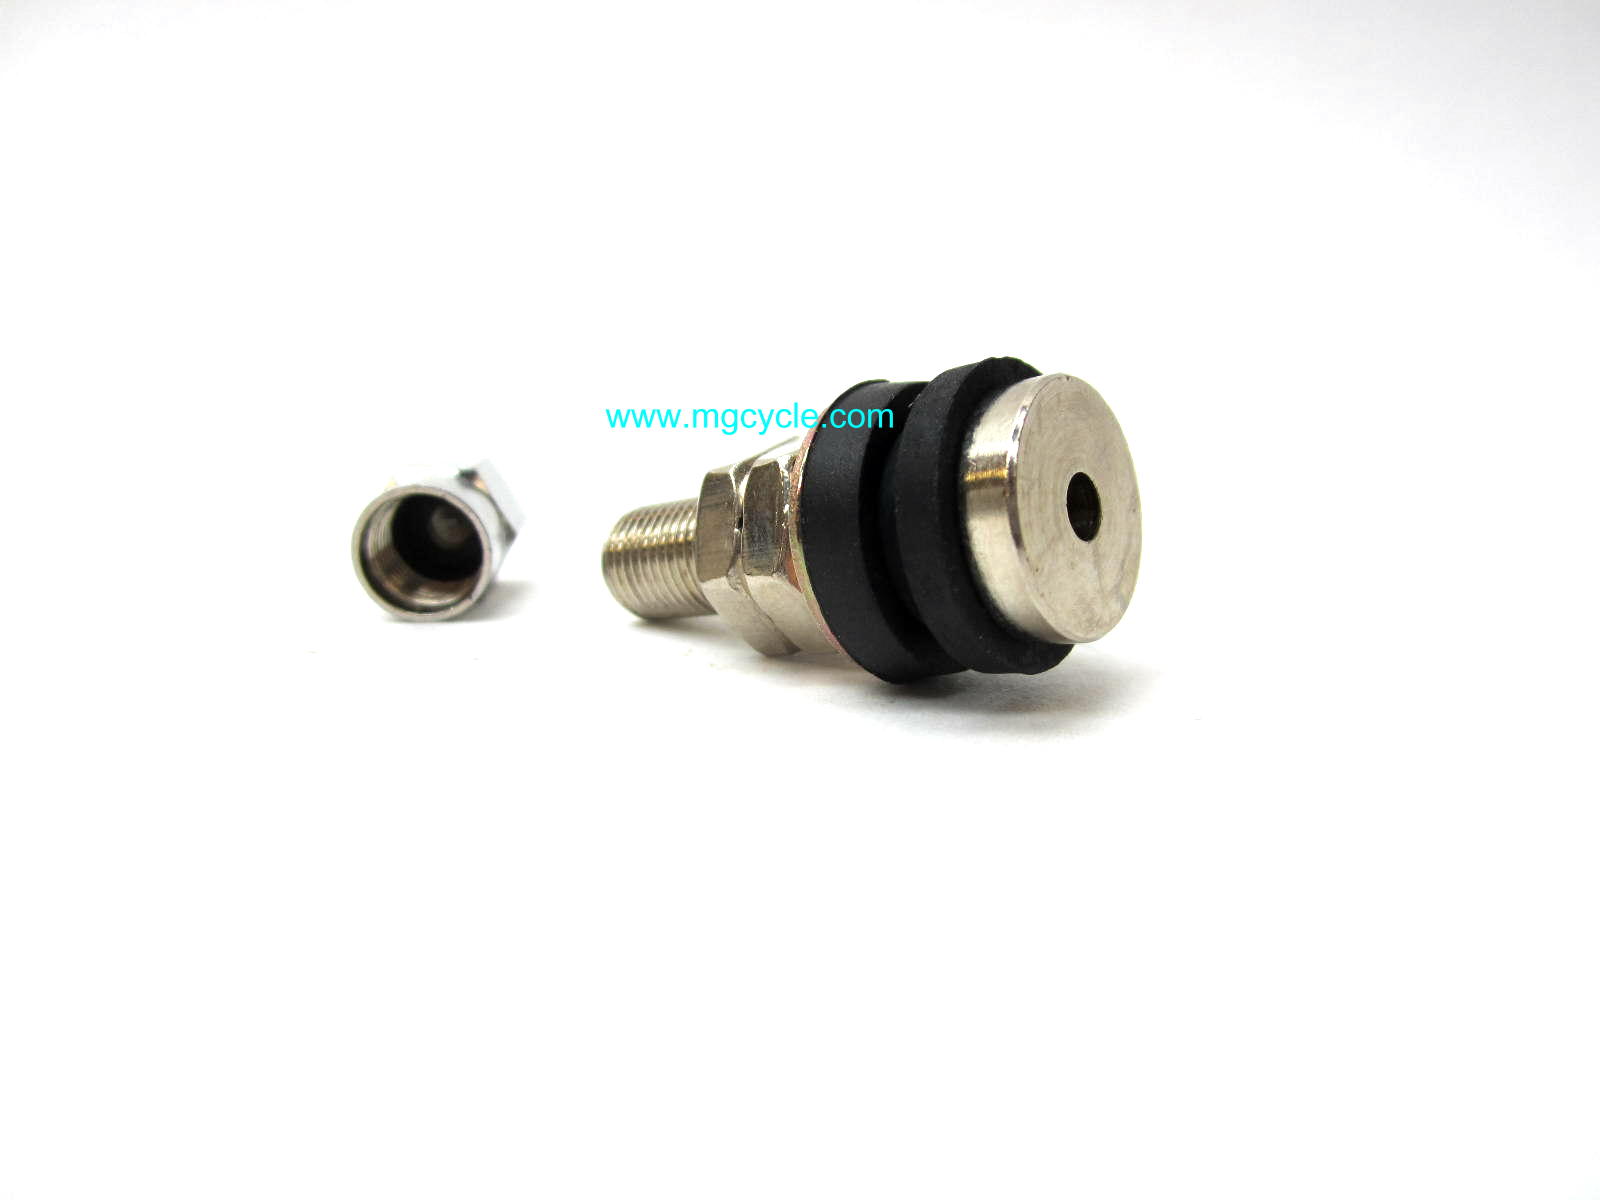 Parts Unlimited generic valve stem